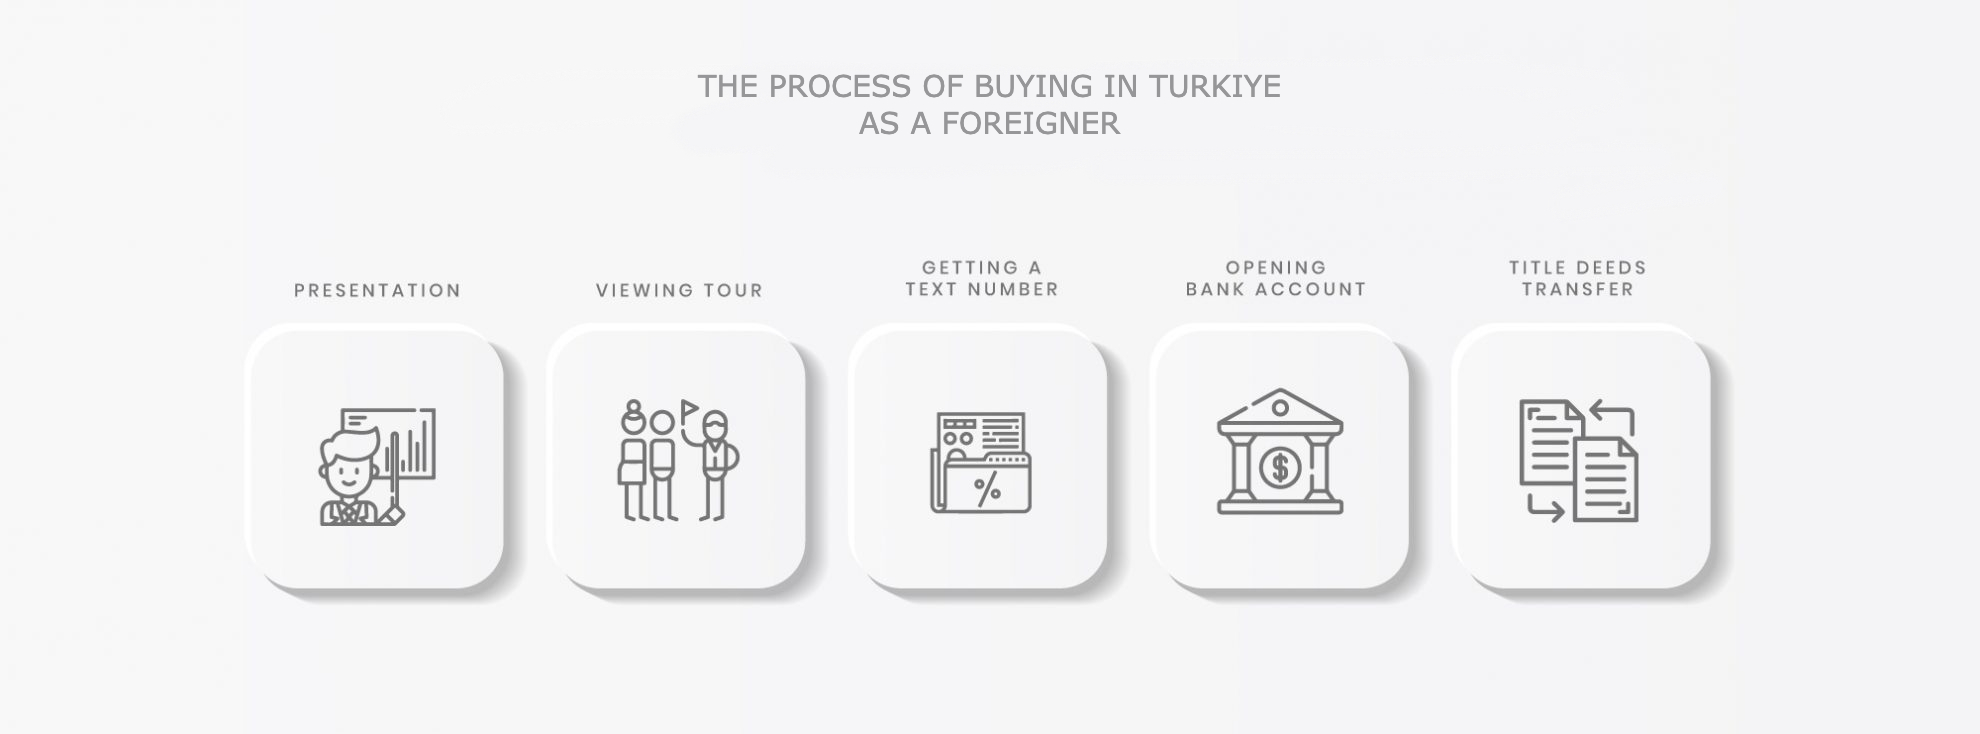 buying procedures in Türkiye